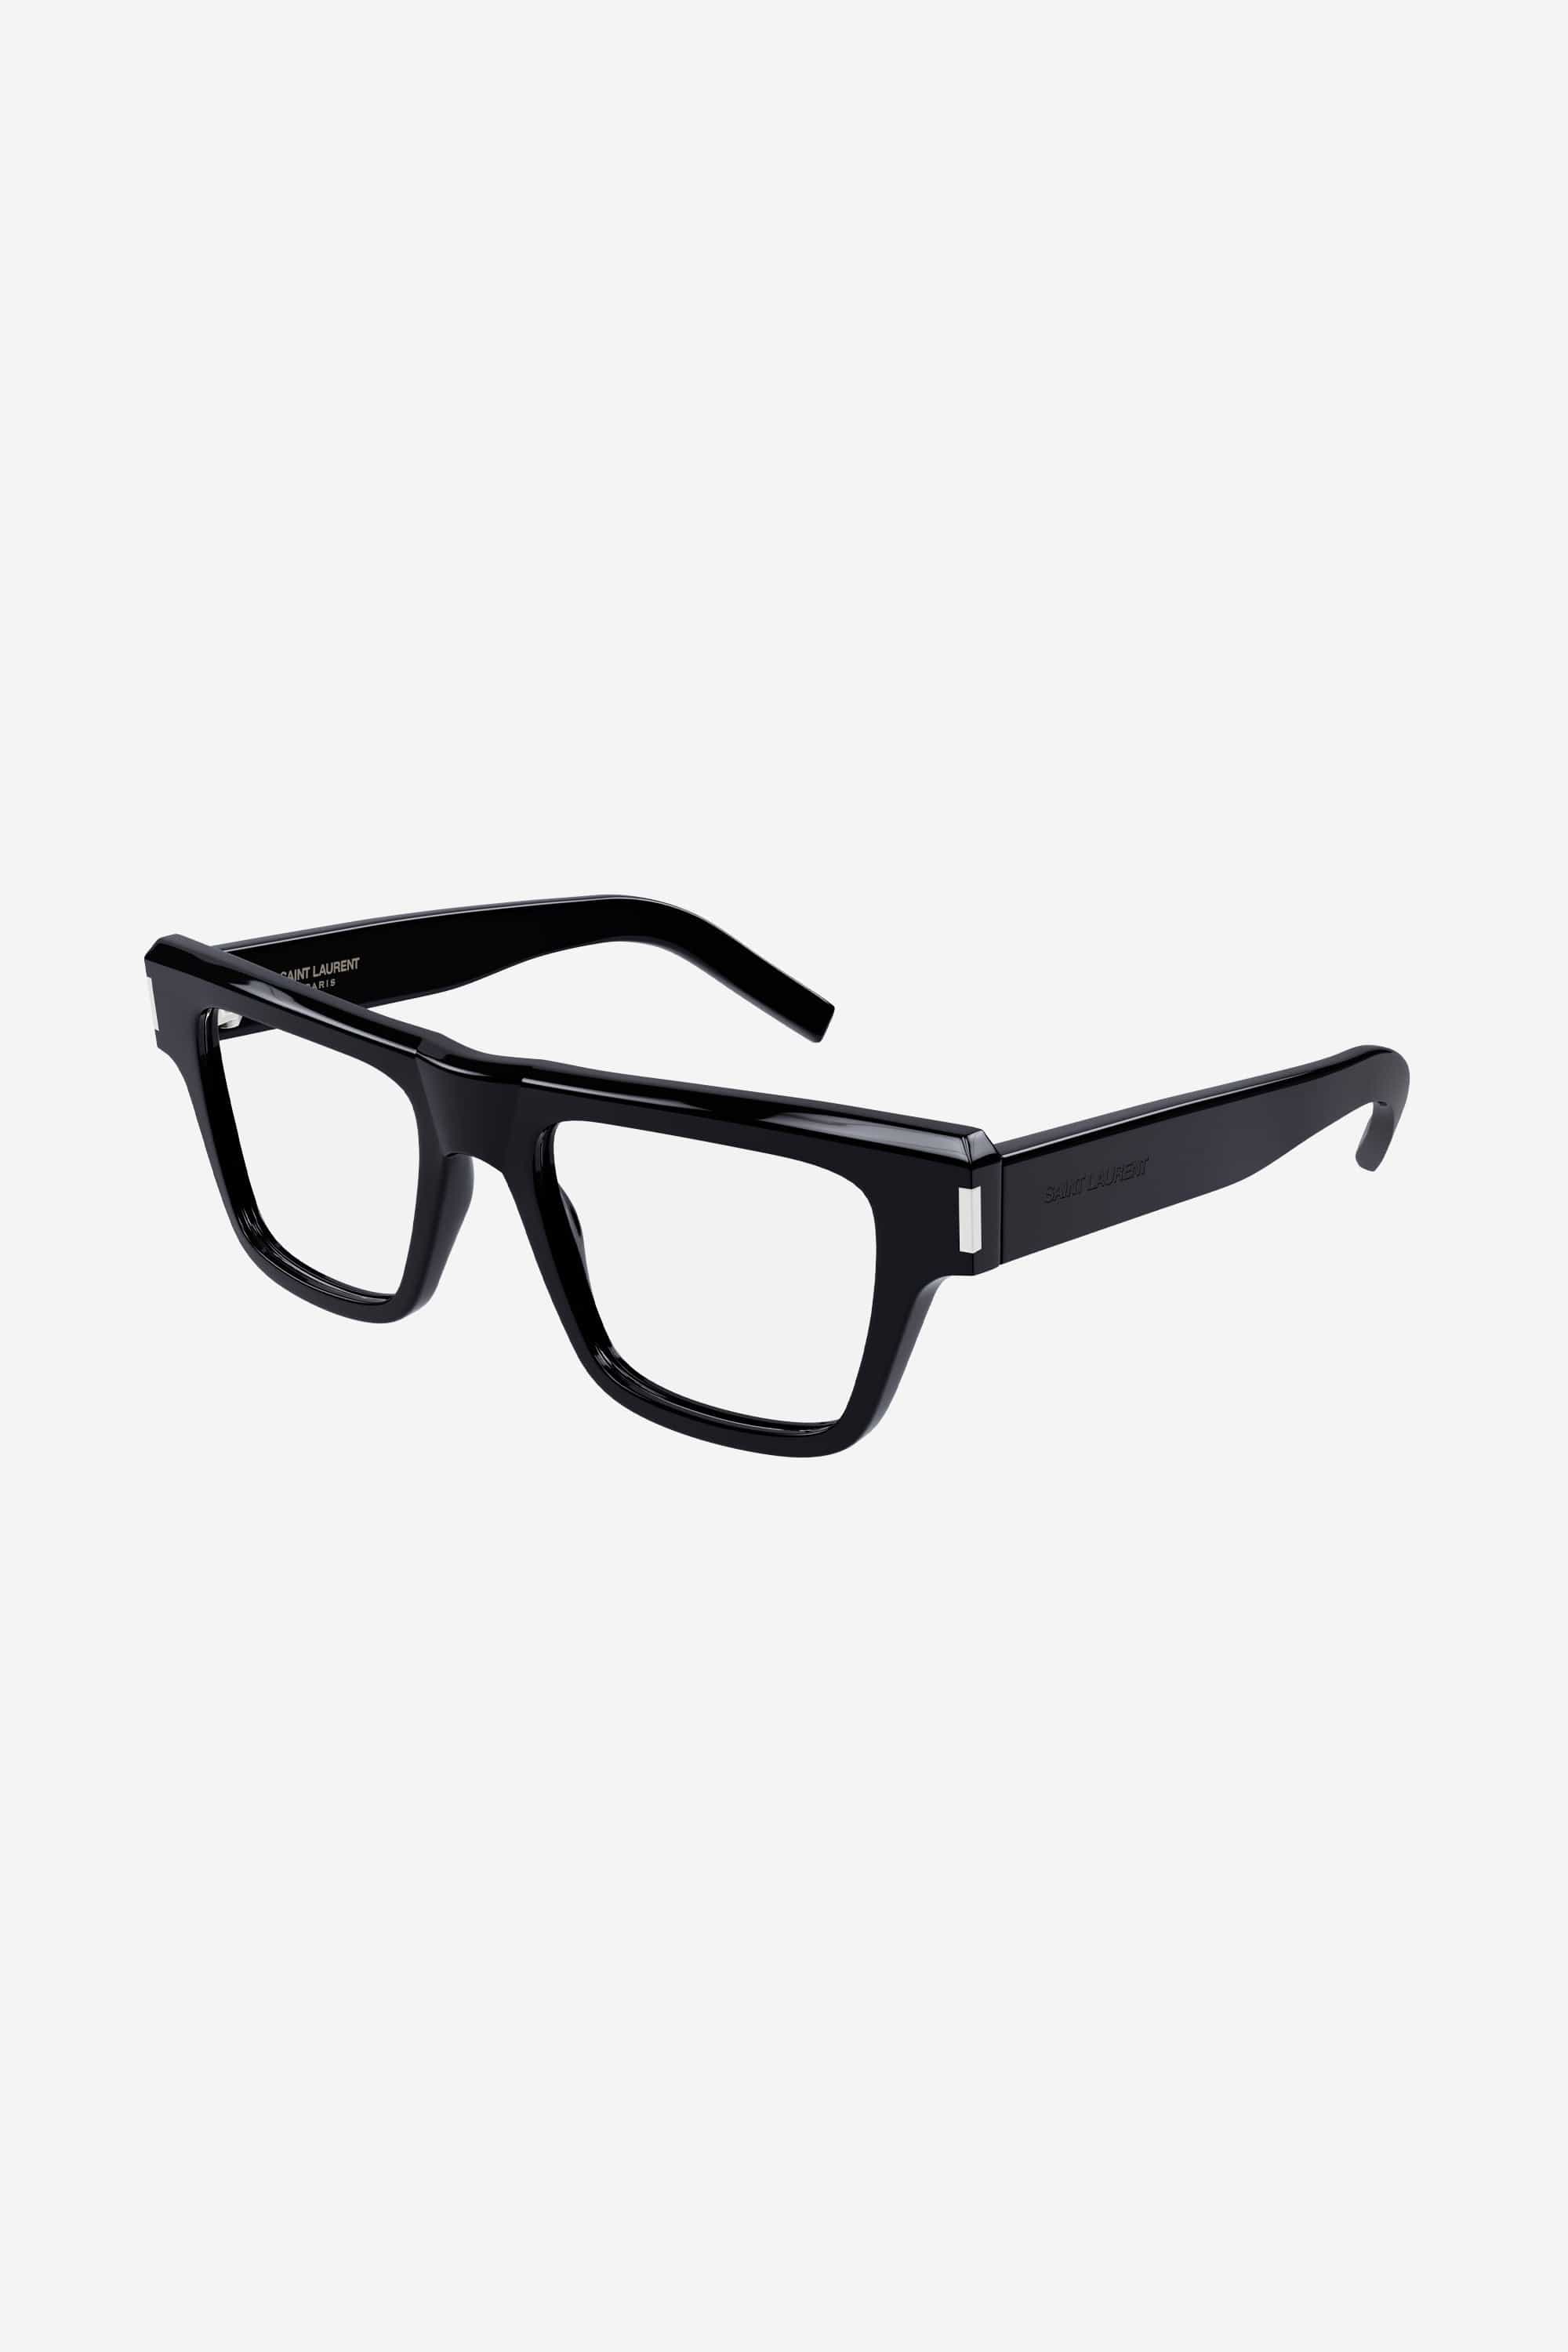 Saint Laurent squared black angular frame - Eyewear Club